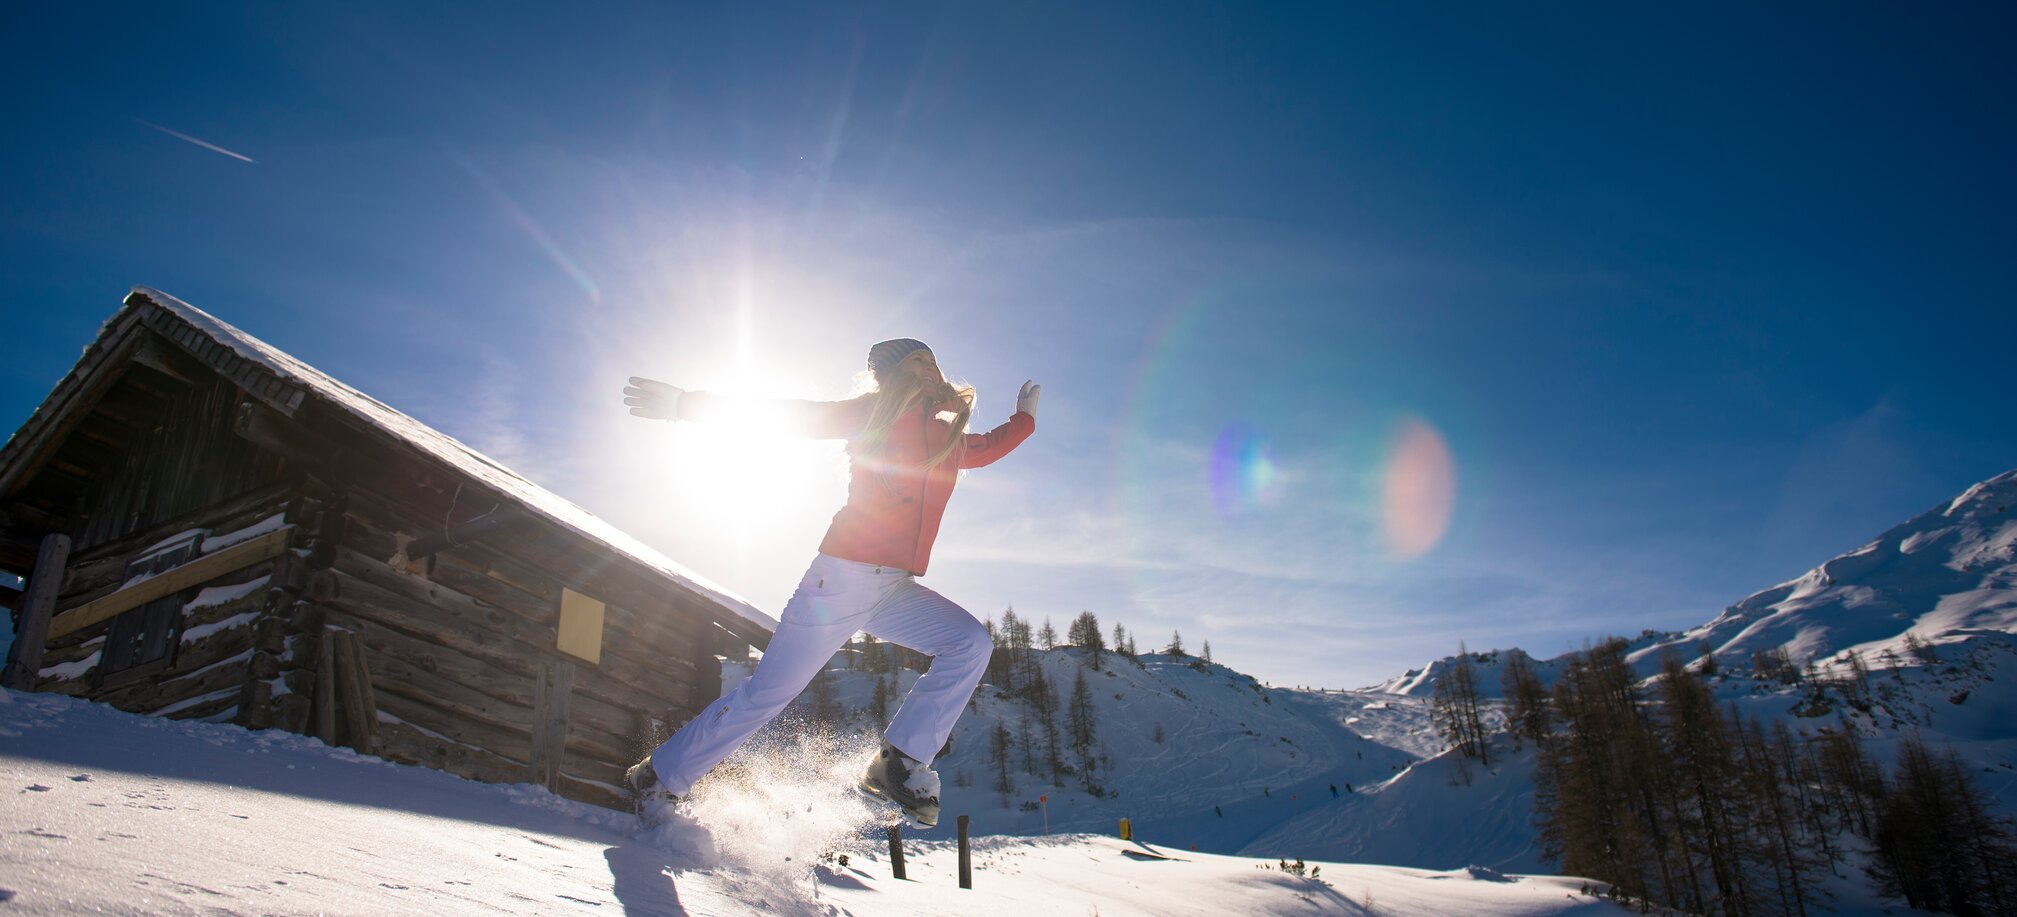 Enjoying the sun during sunshine skiing in Ski amadé